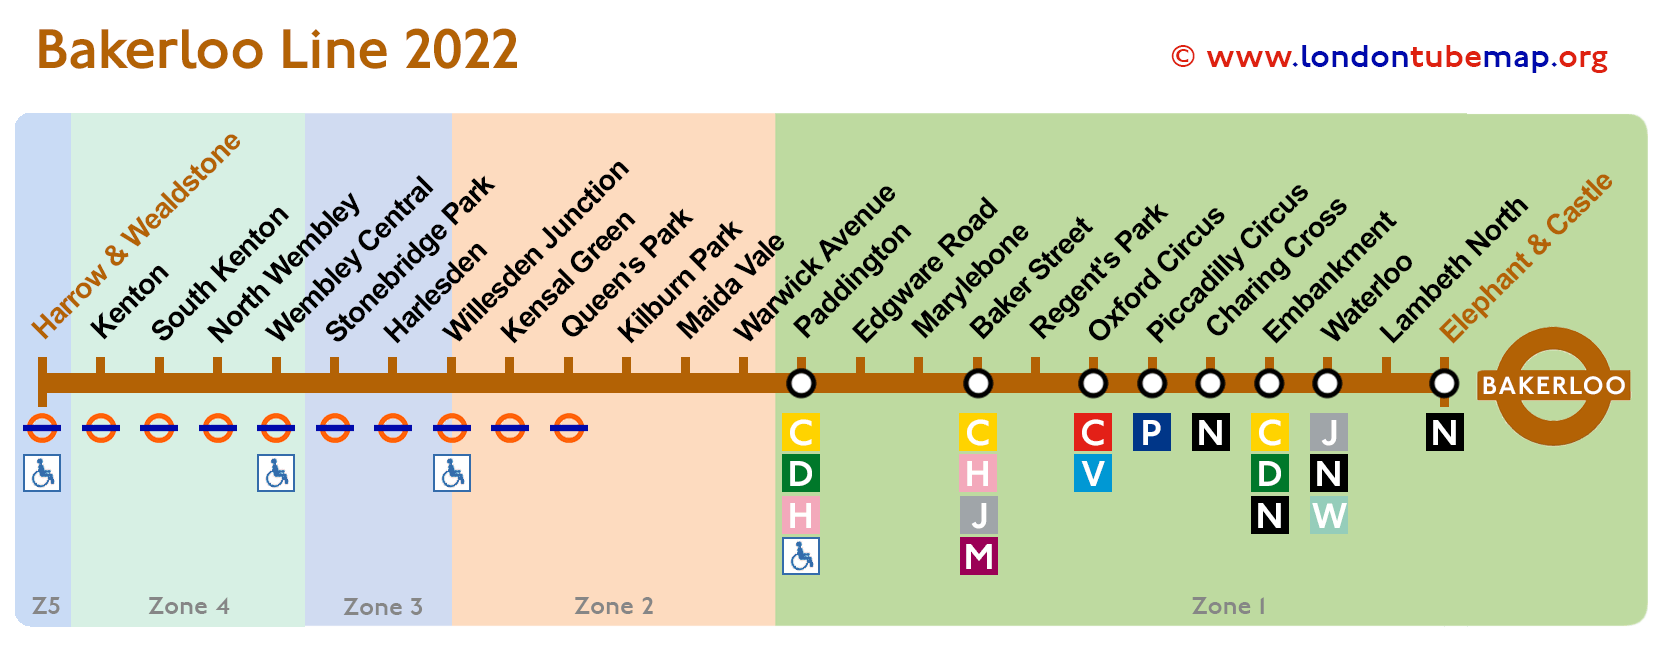 Bakerloo line map 2022